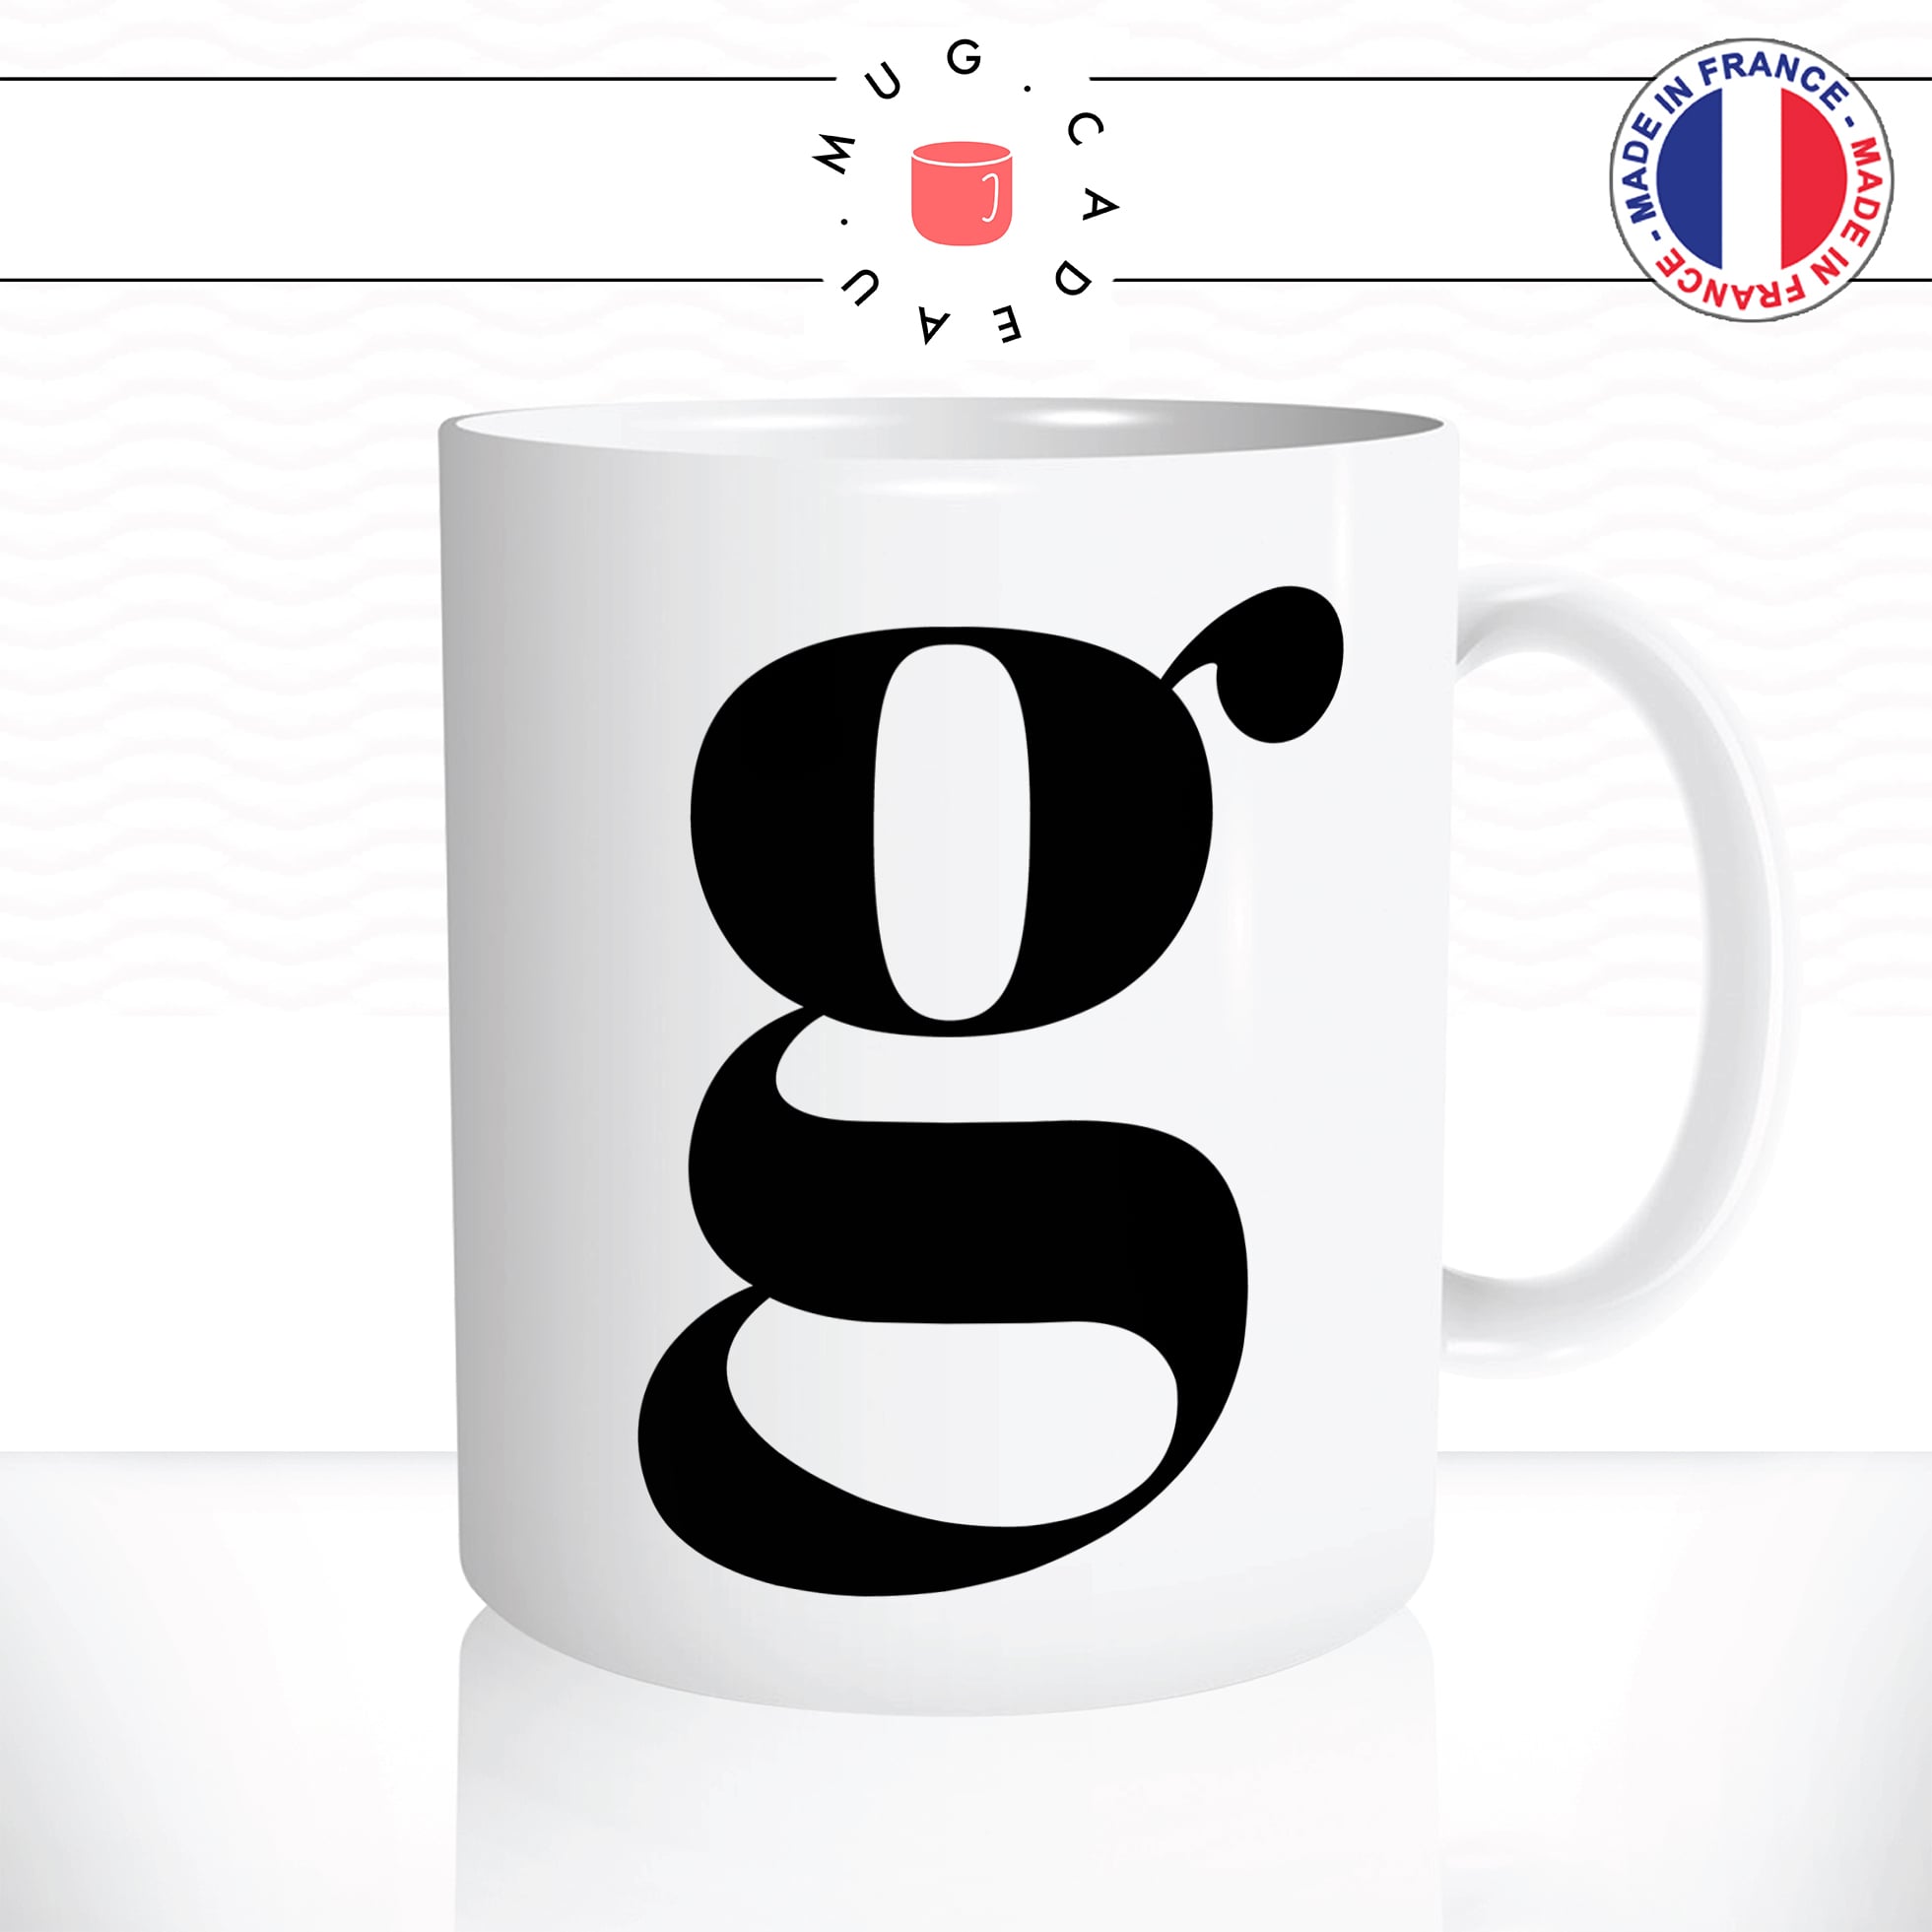 mug-tasse-G-initiale-alphabet-prenom-nom-calligraphie-majuscule-minuscule-original-café-thé-idée-cadeau-personnalisable-fun2